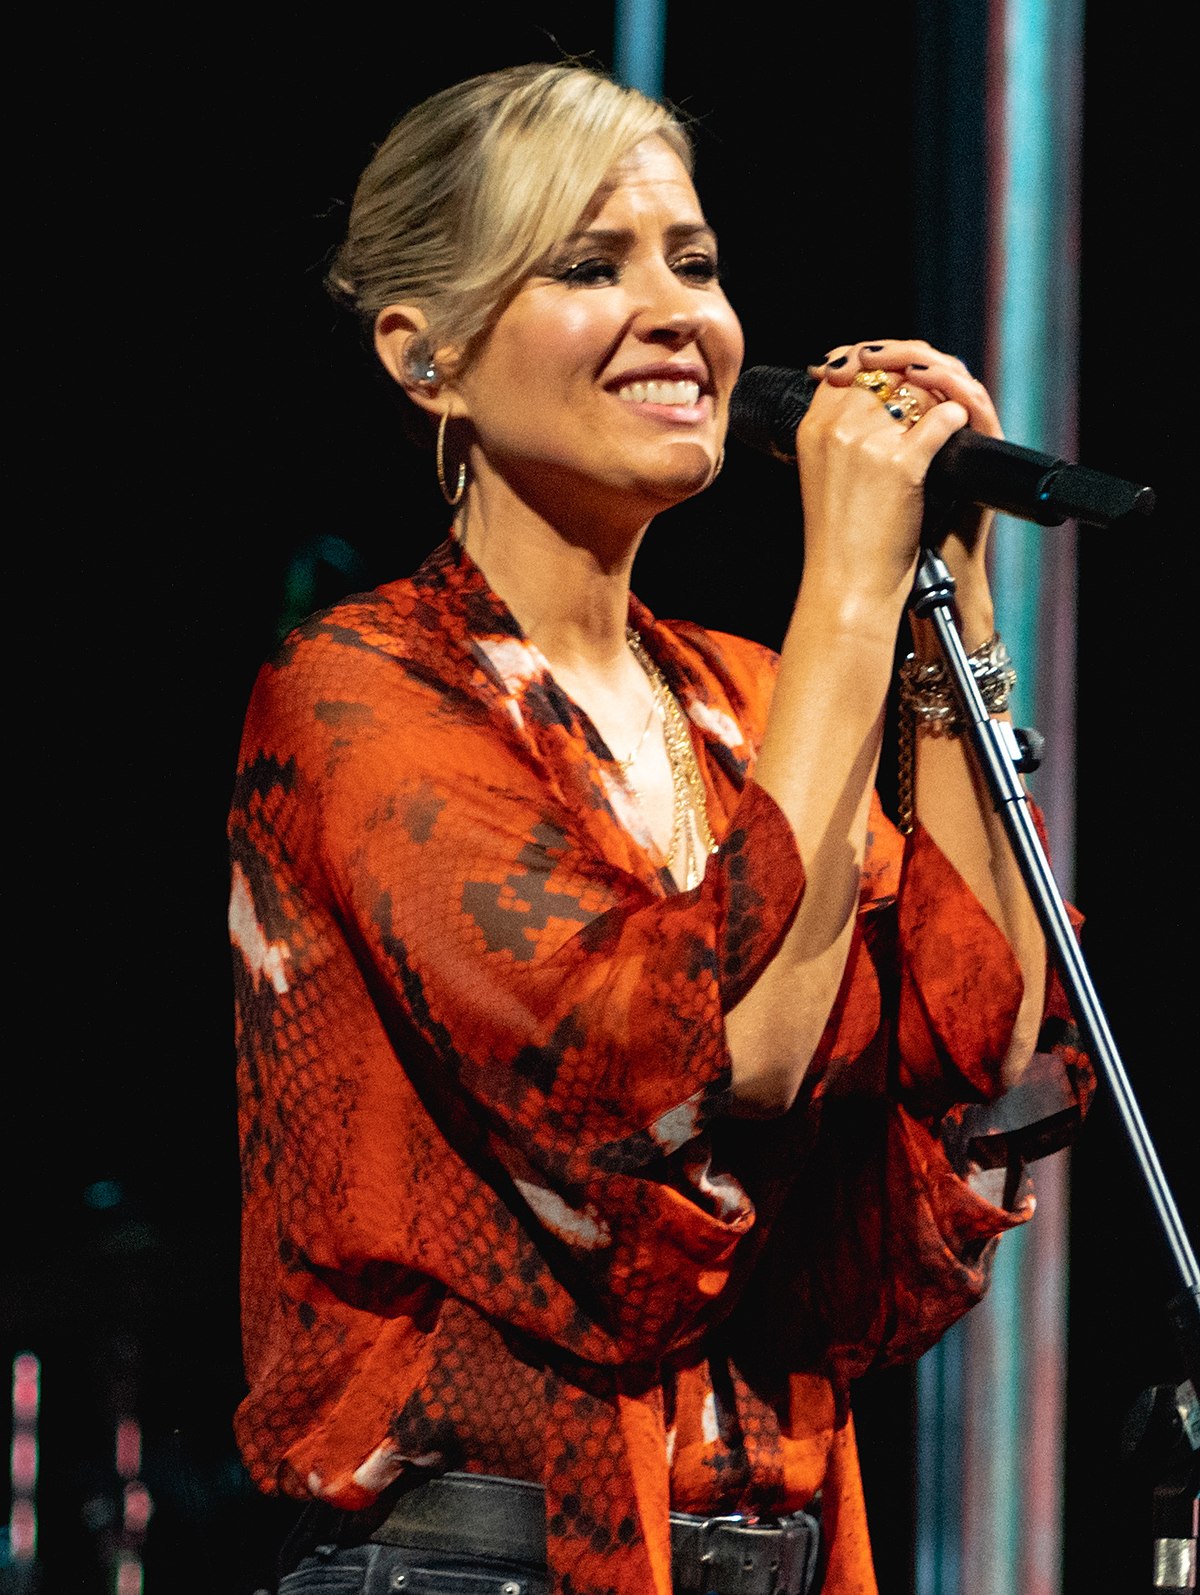 Dido (singer) - Wikipedia